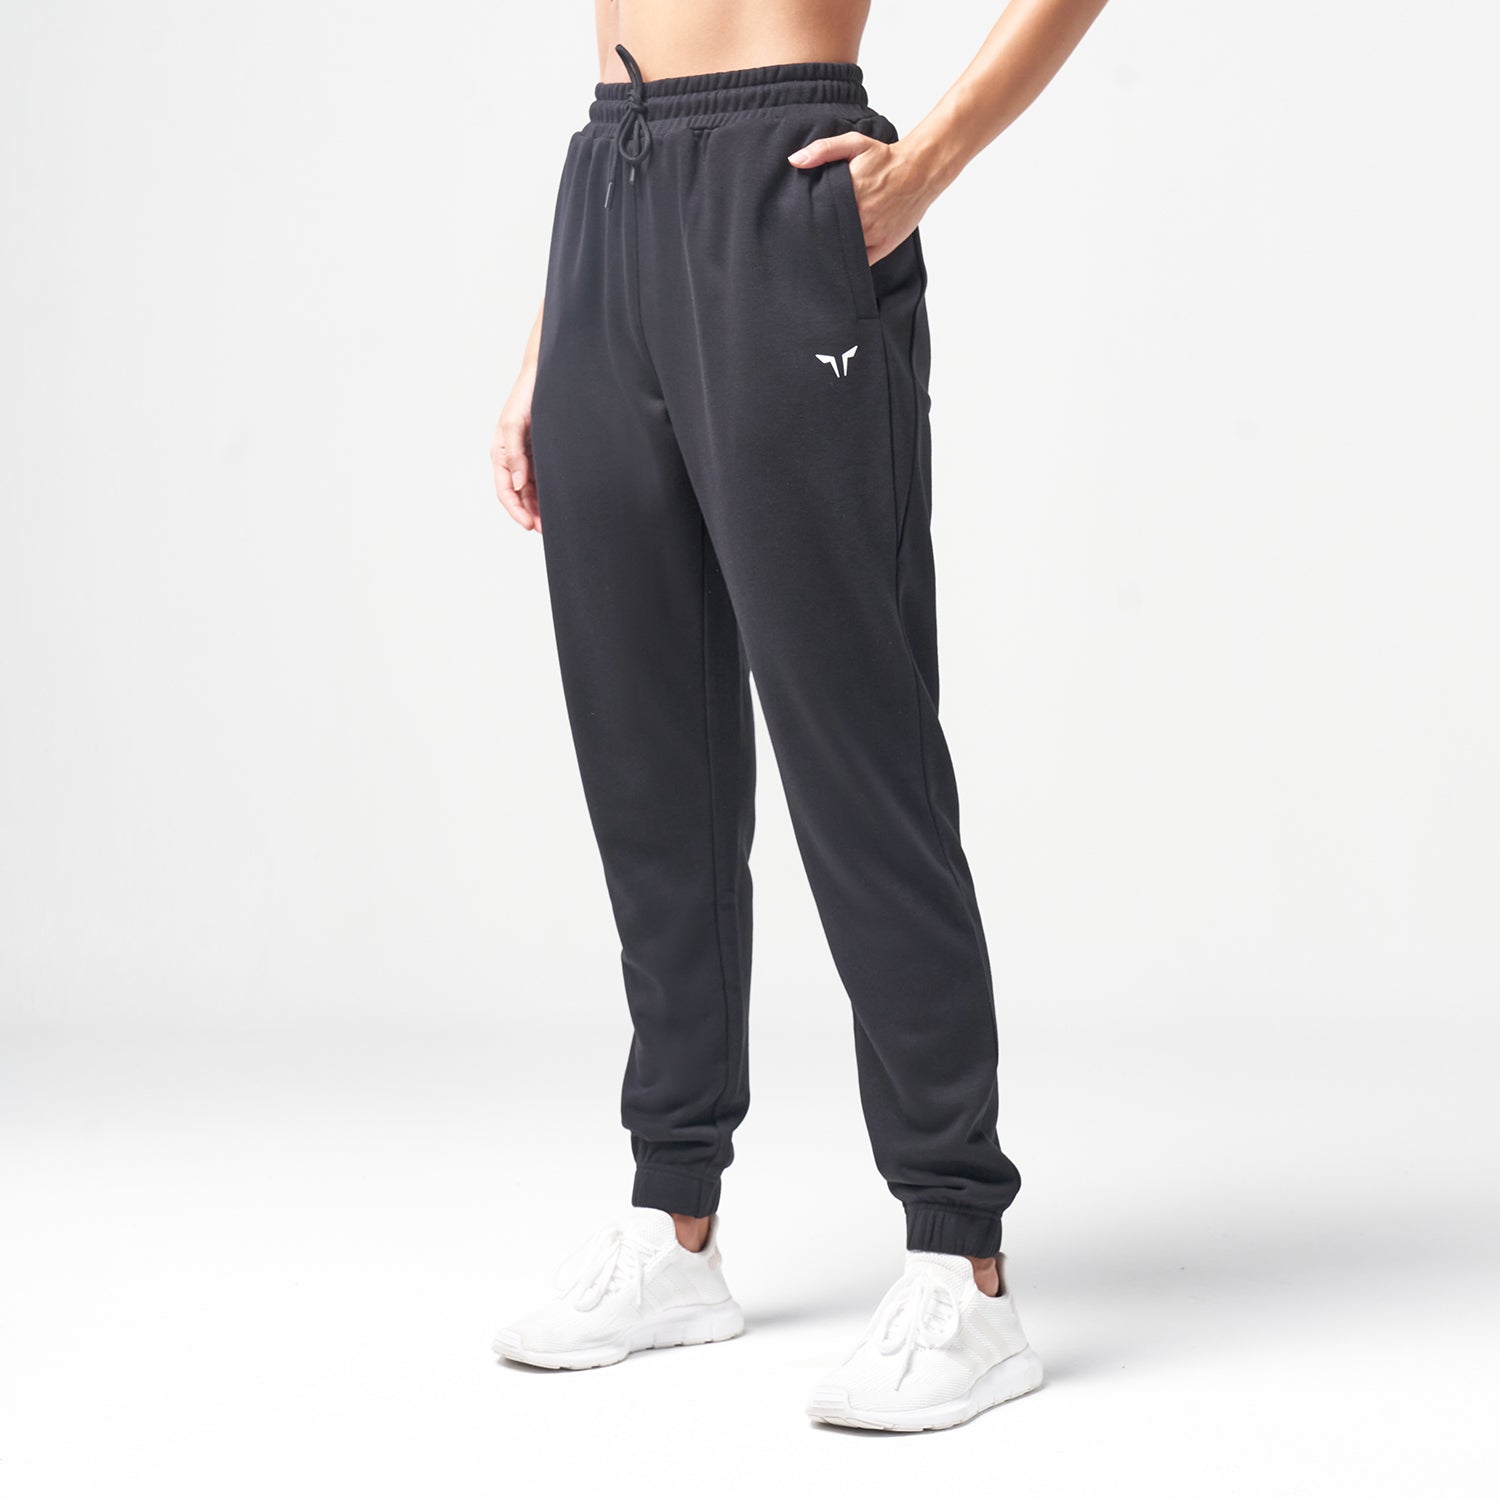 SA, Essential Joggers - Black, Workout Pants Women